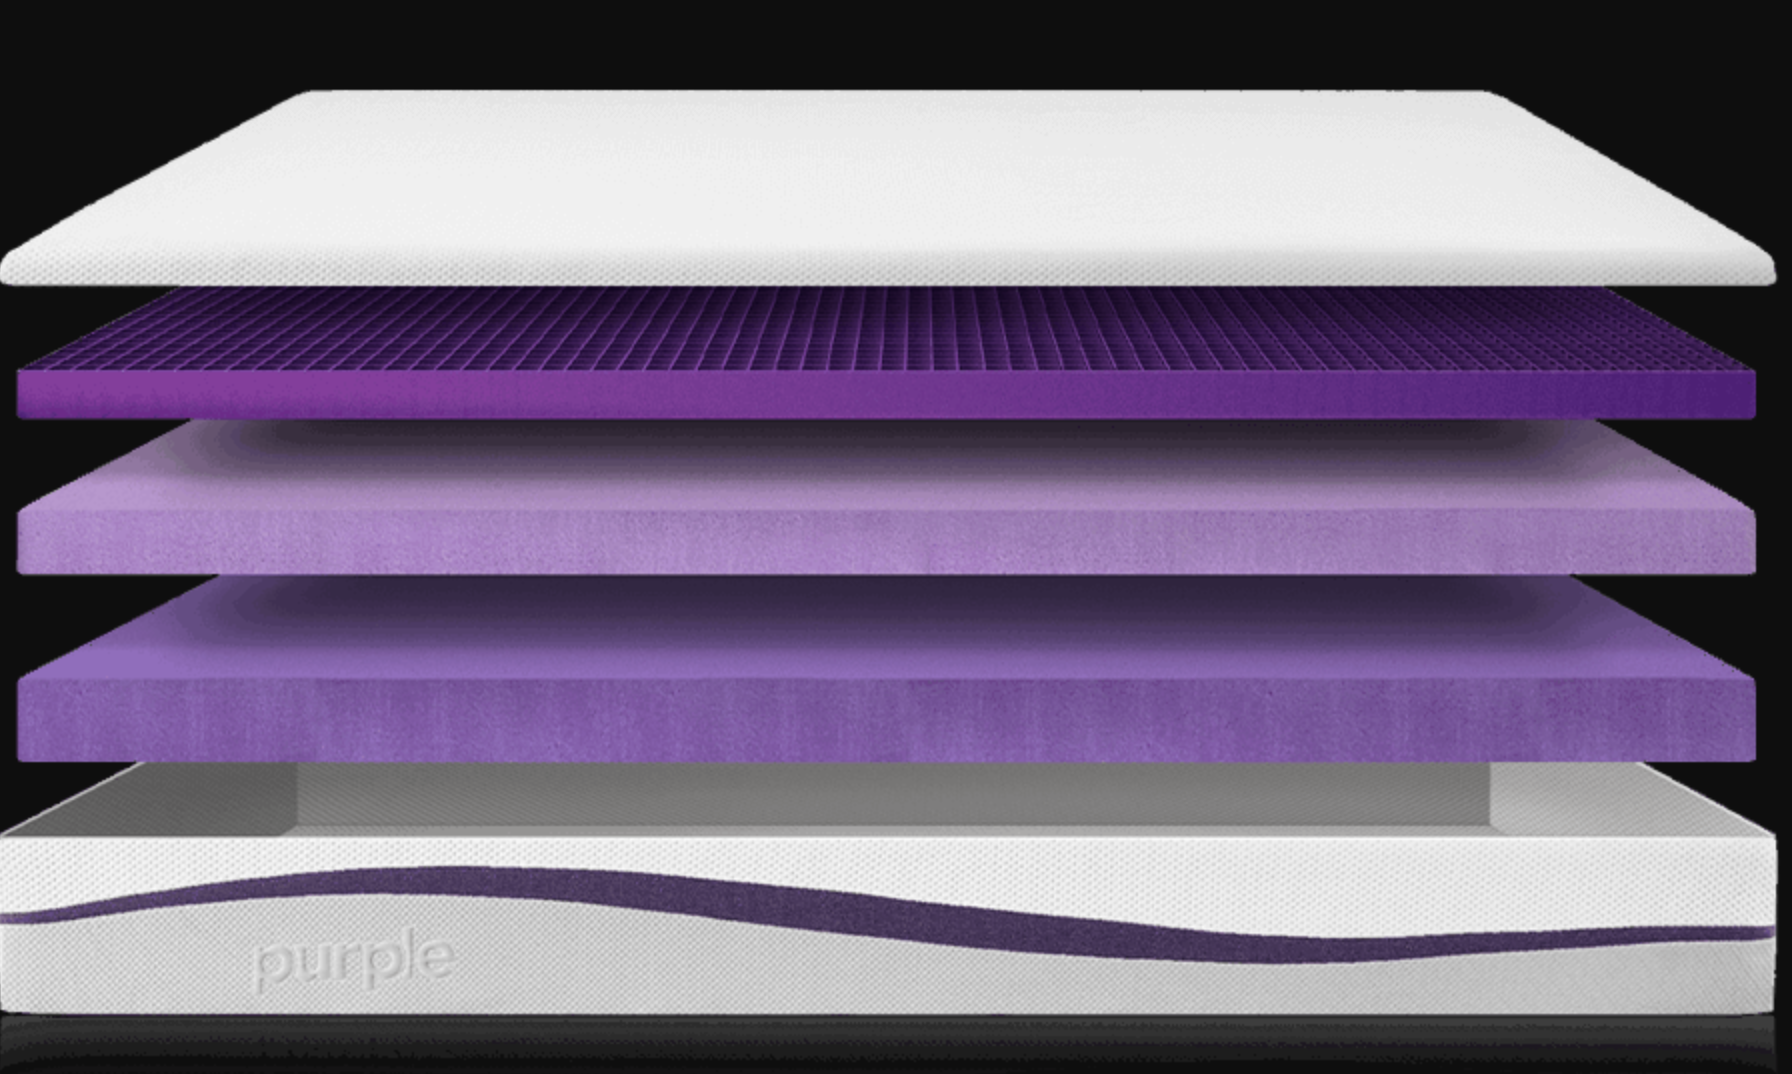 purple mattress not industry standard size